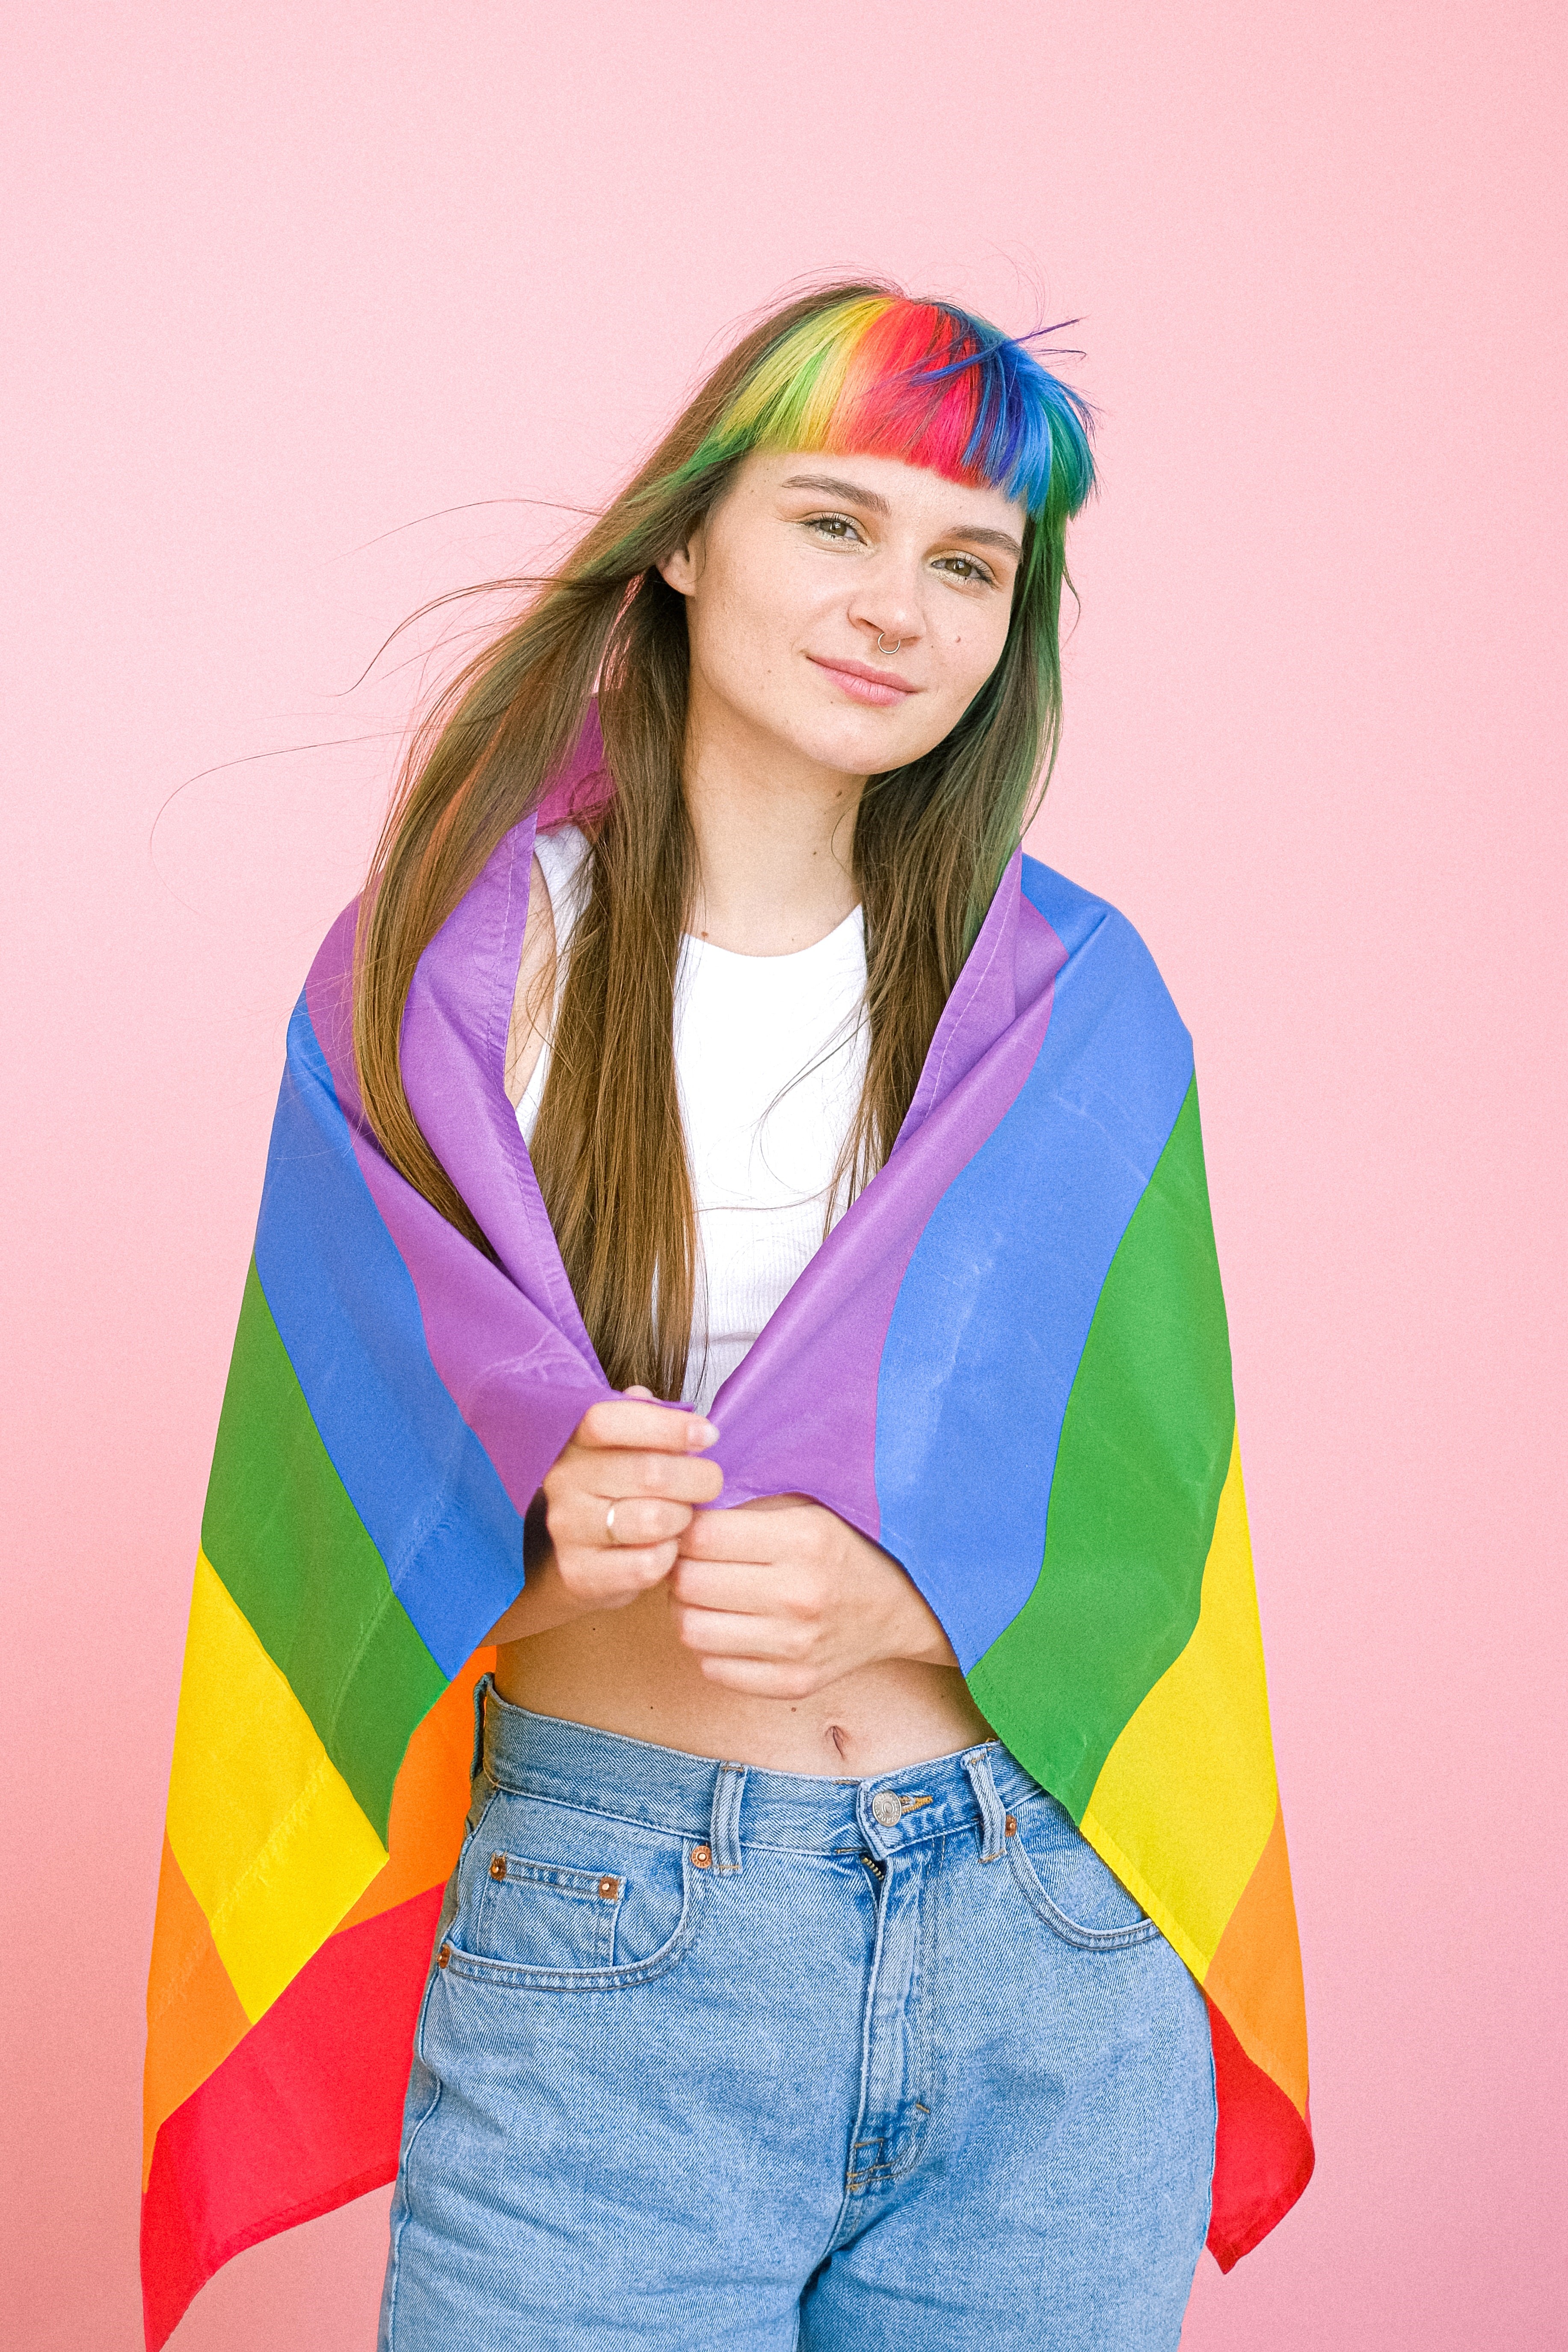 LGBTQ+ Person wearing rainbow flag